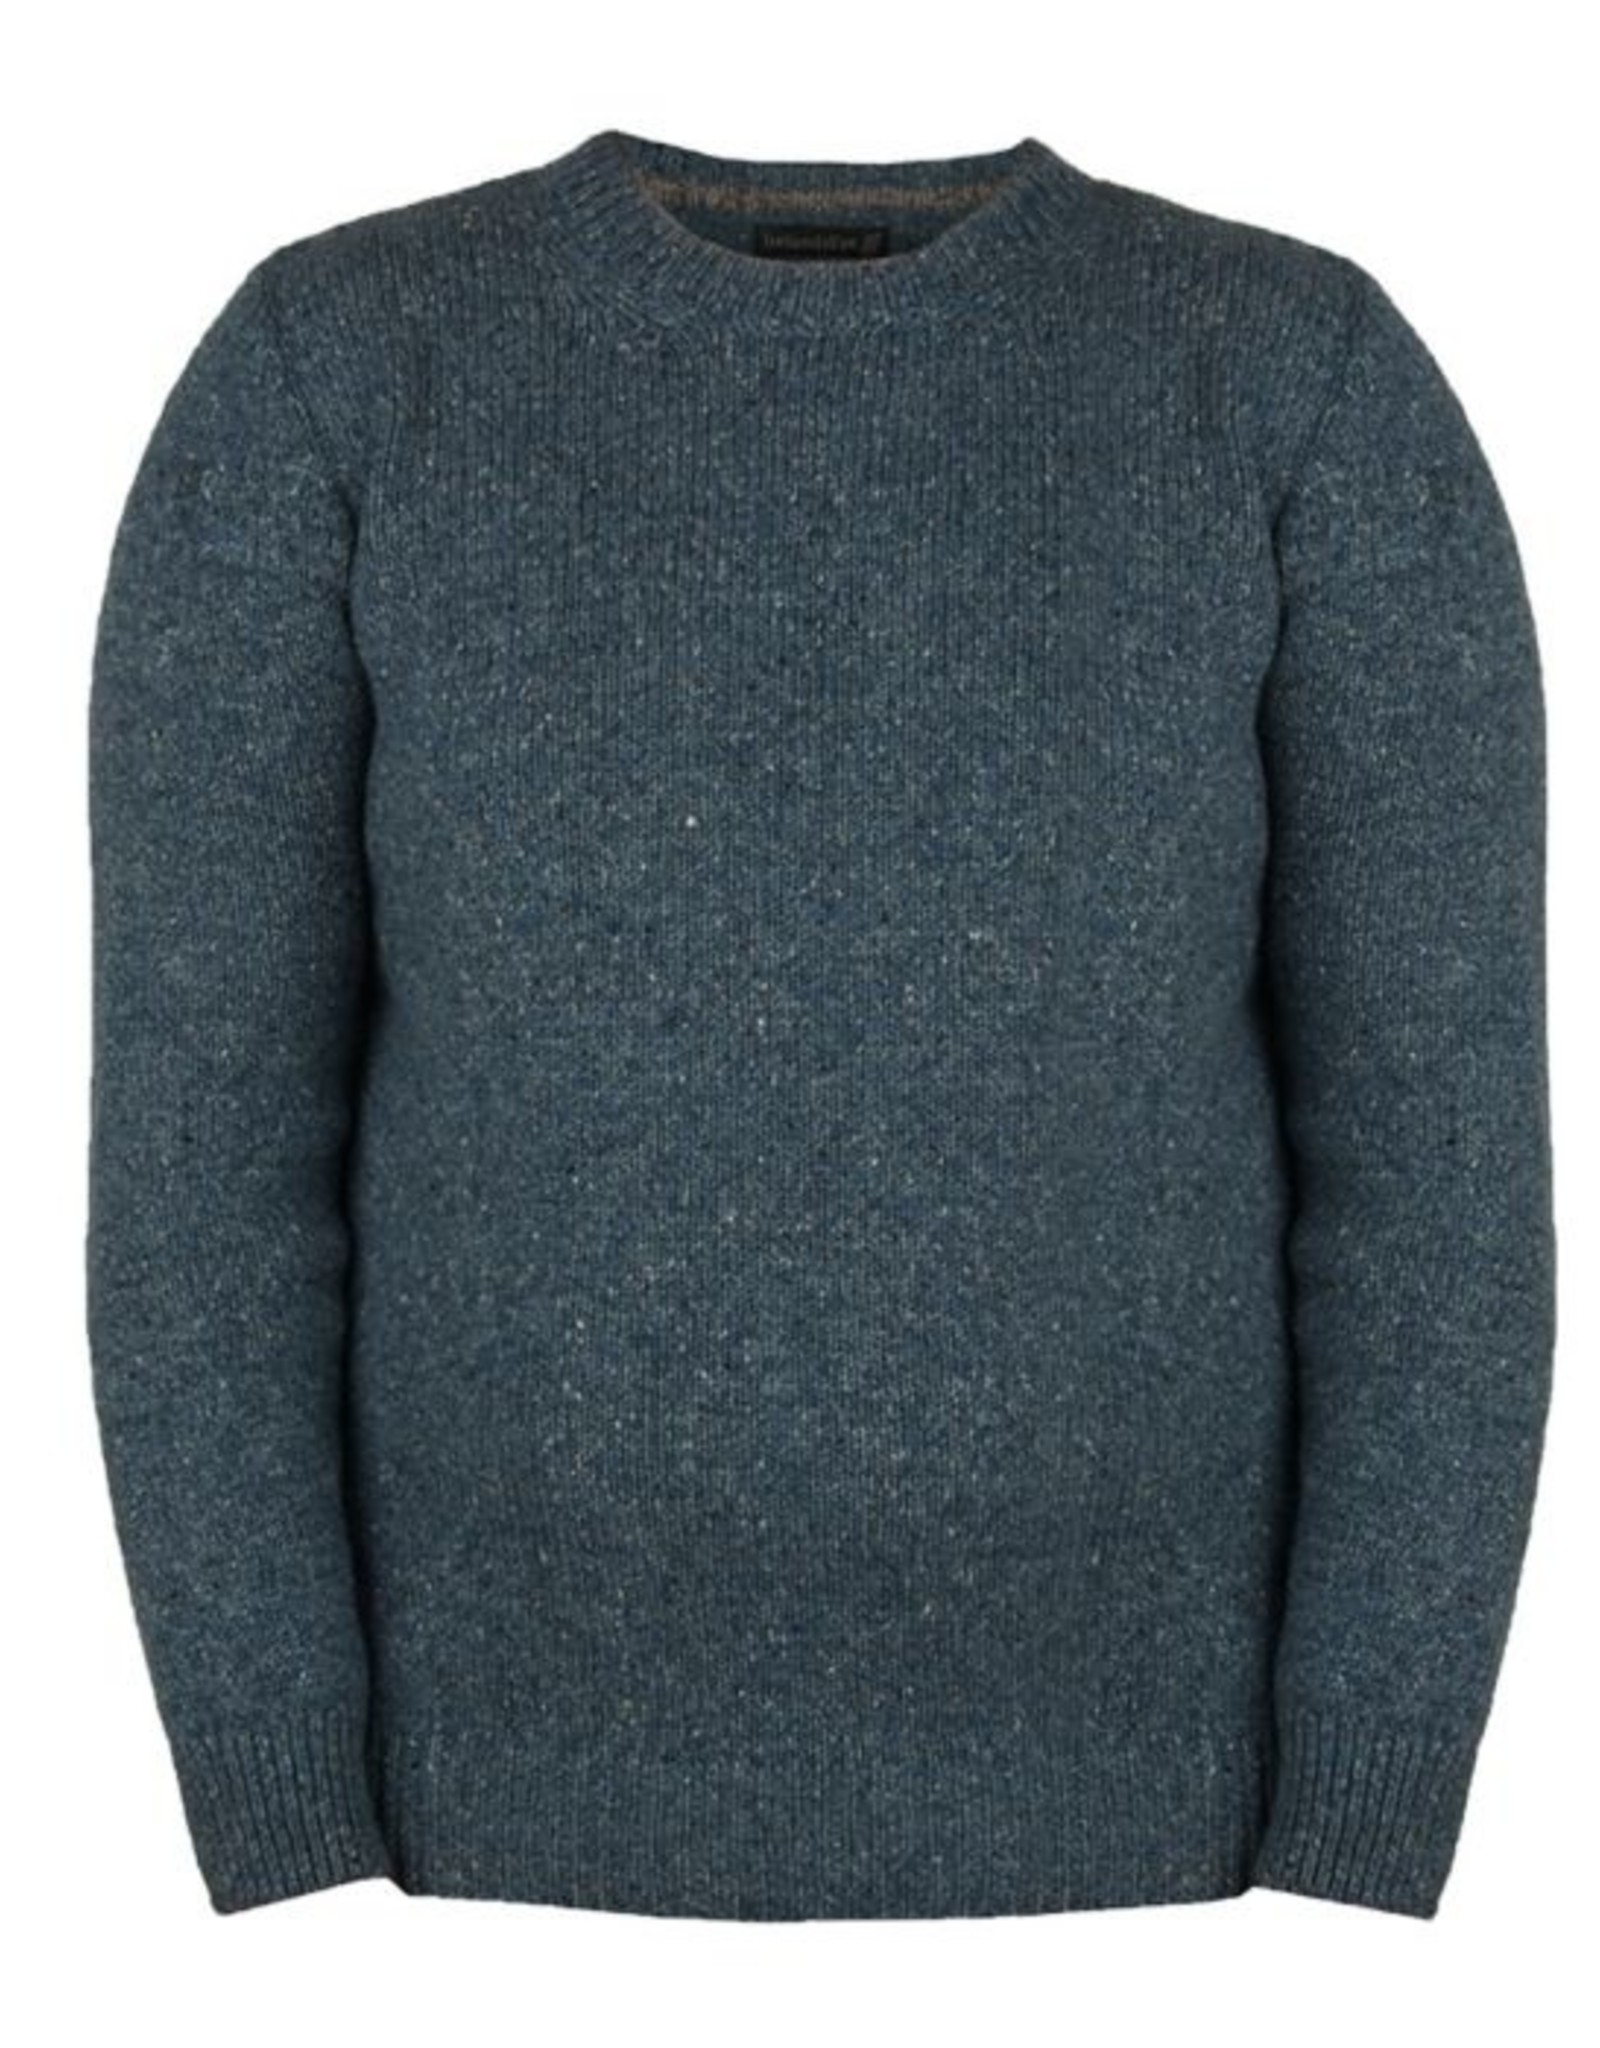 IrelandsEye IE Rathwood JERSEY CREW NECK Sweater SeaSpray  XL